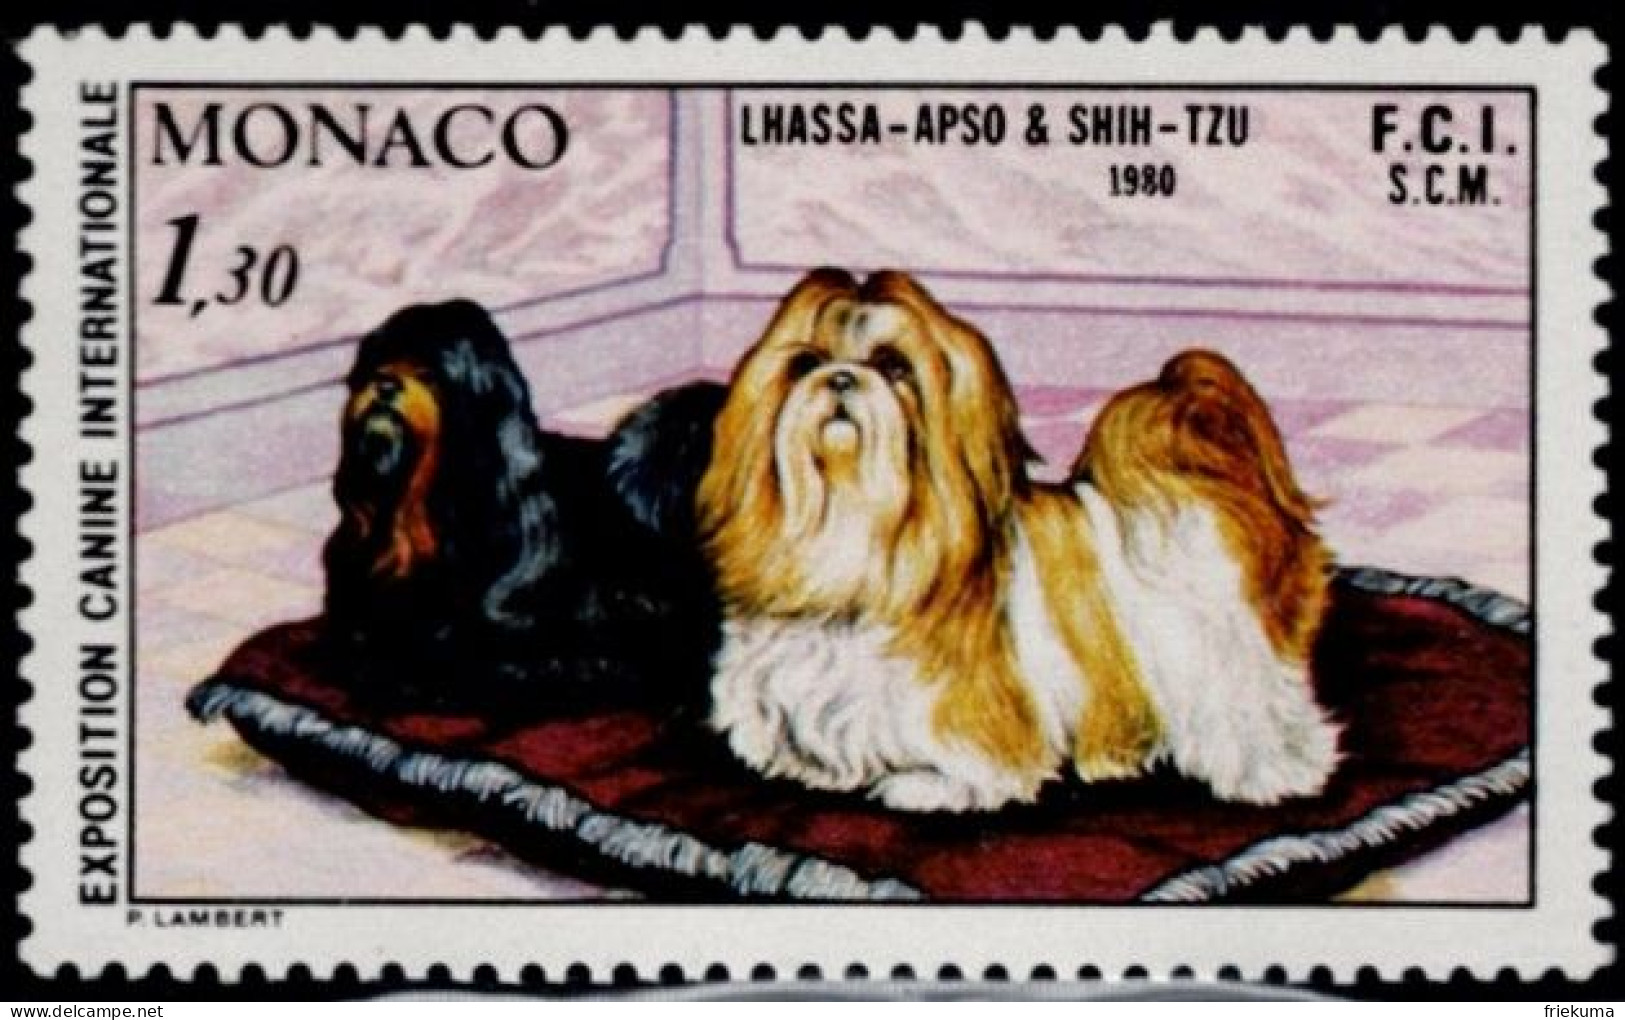 Monaco 1980, Exposition Canine Internationale/International Dog Show, Monte Carlo: Lhasa-Apso And Shih-Tzu, MiNr. 1035 - Hunde